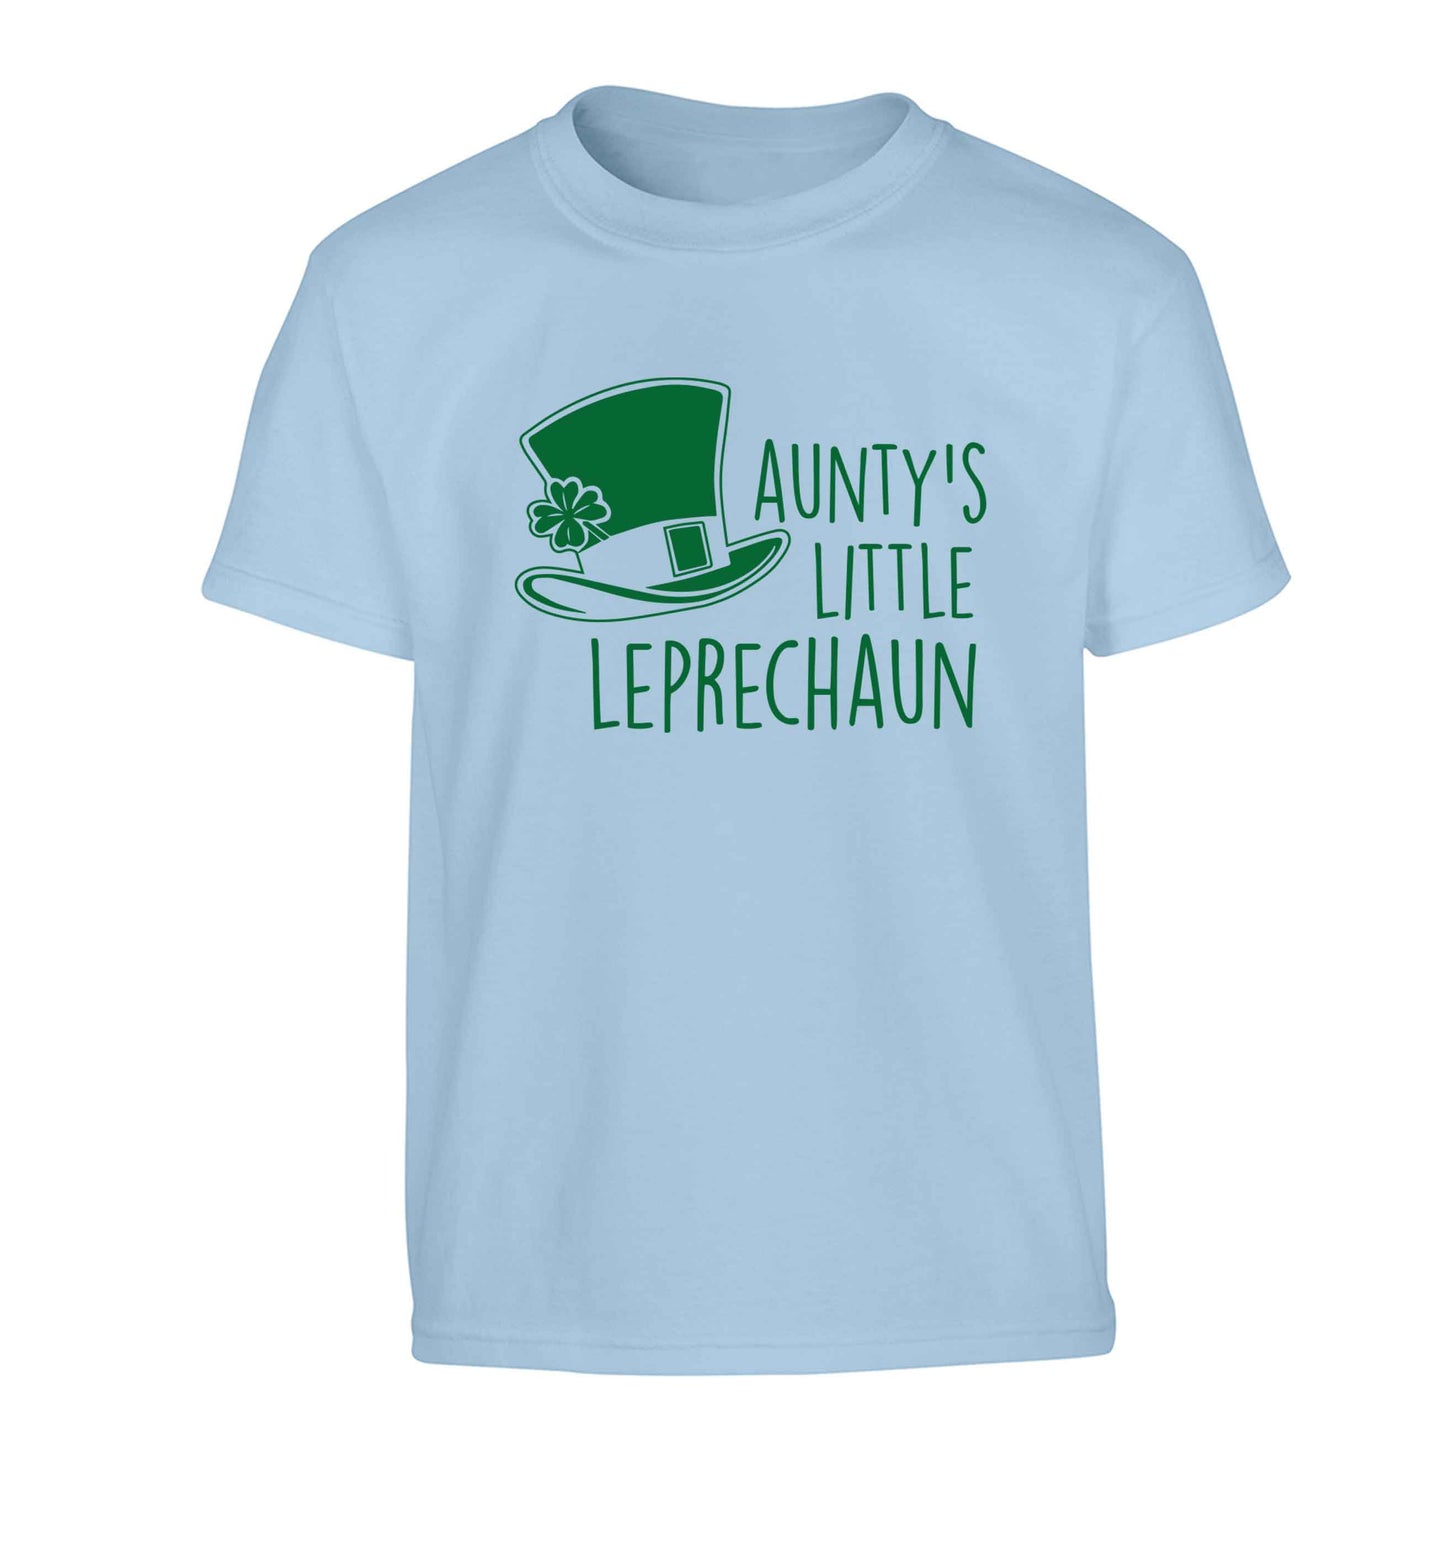 Aunty's little leprechaun Children's light blue Tshirt 12-13 Years